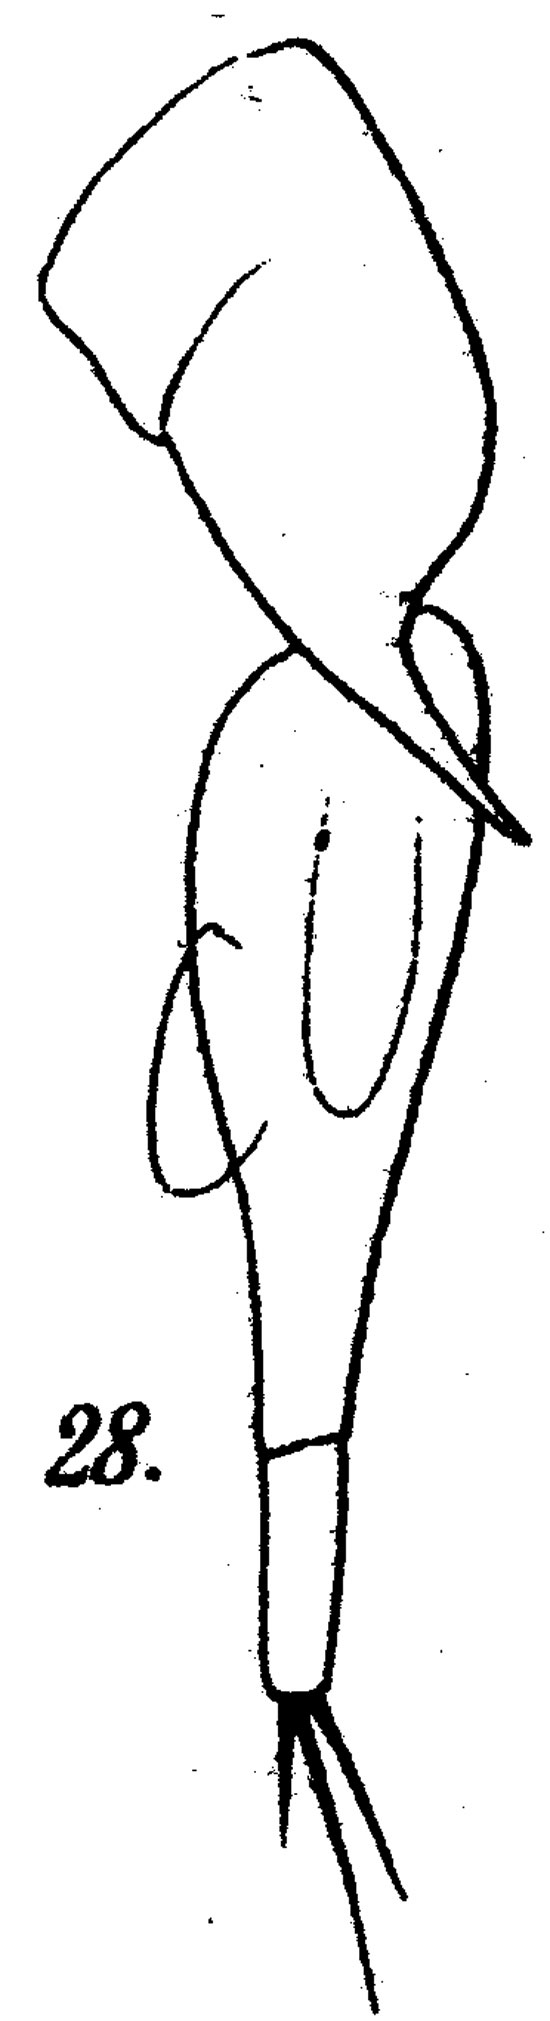 Espce Farranula curta - Planche 5 de figures morphologiques